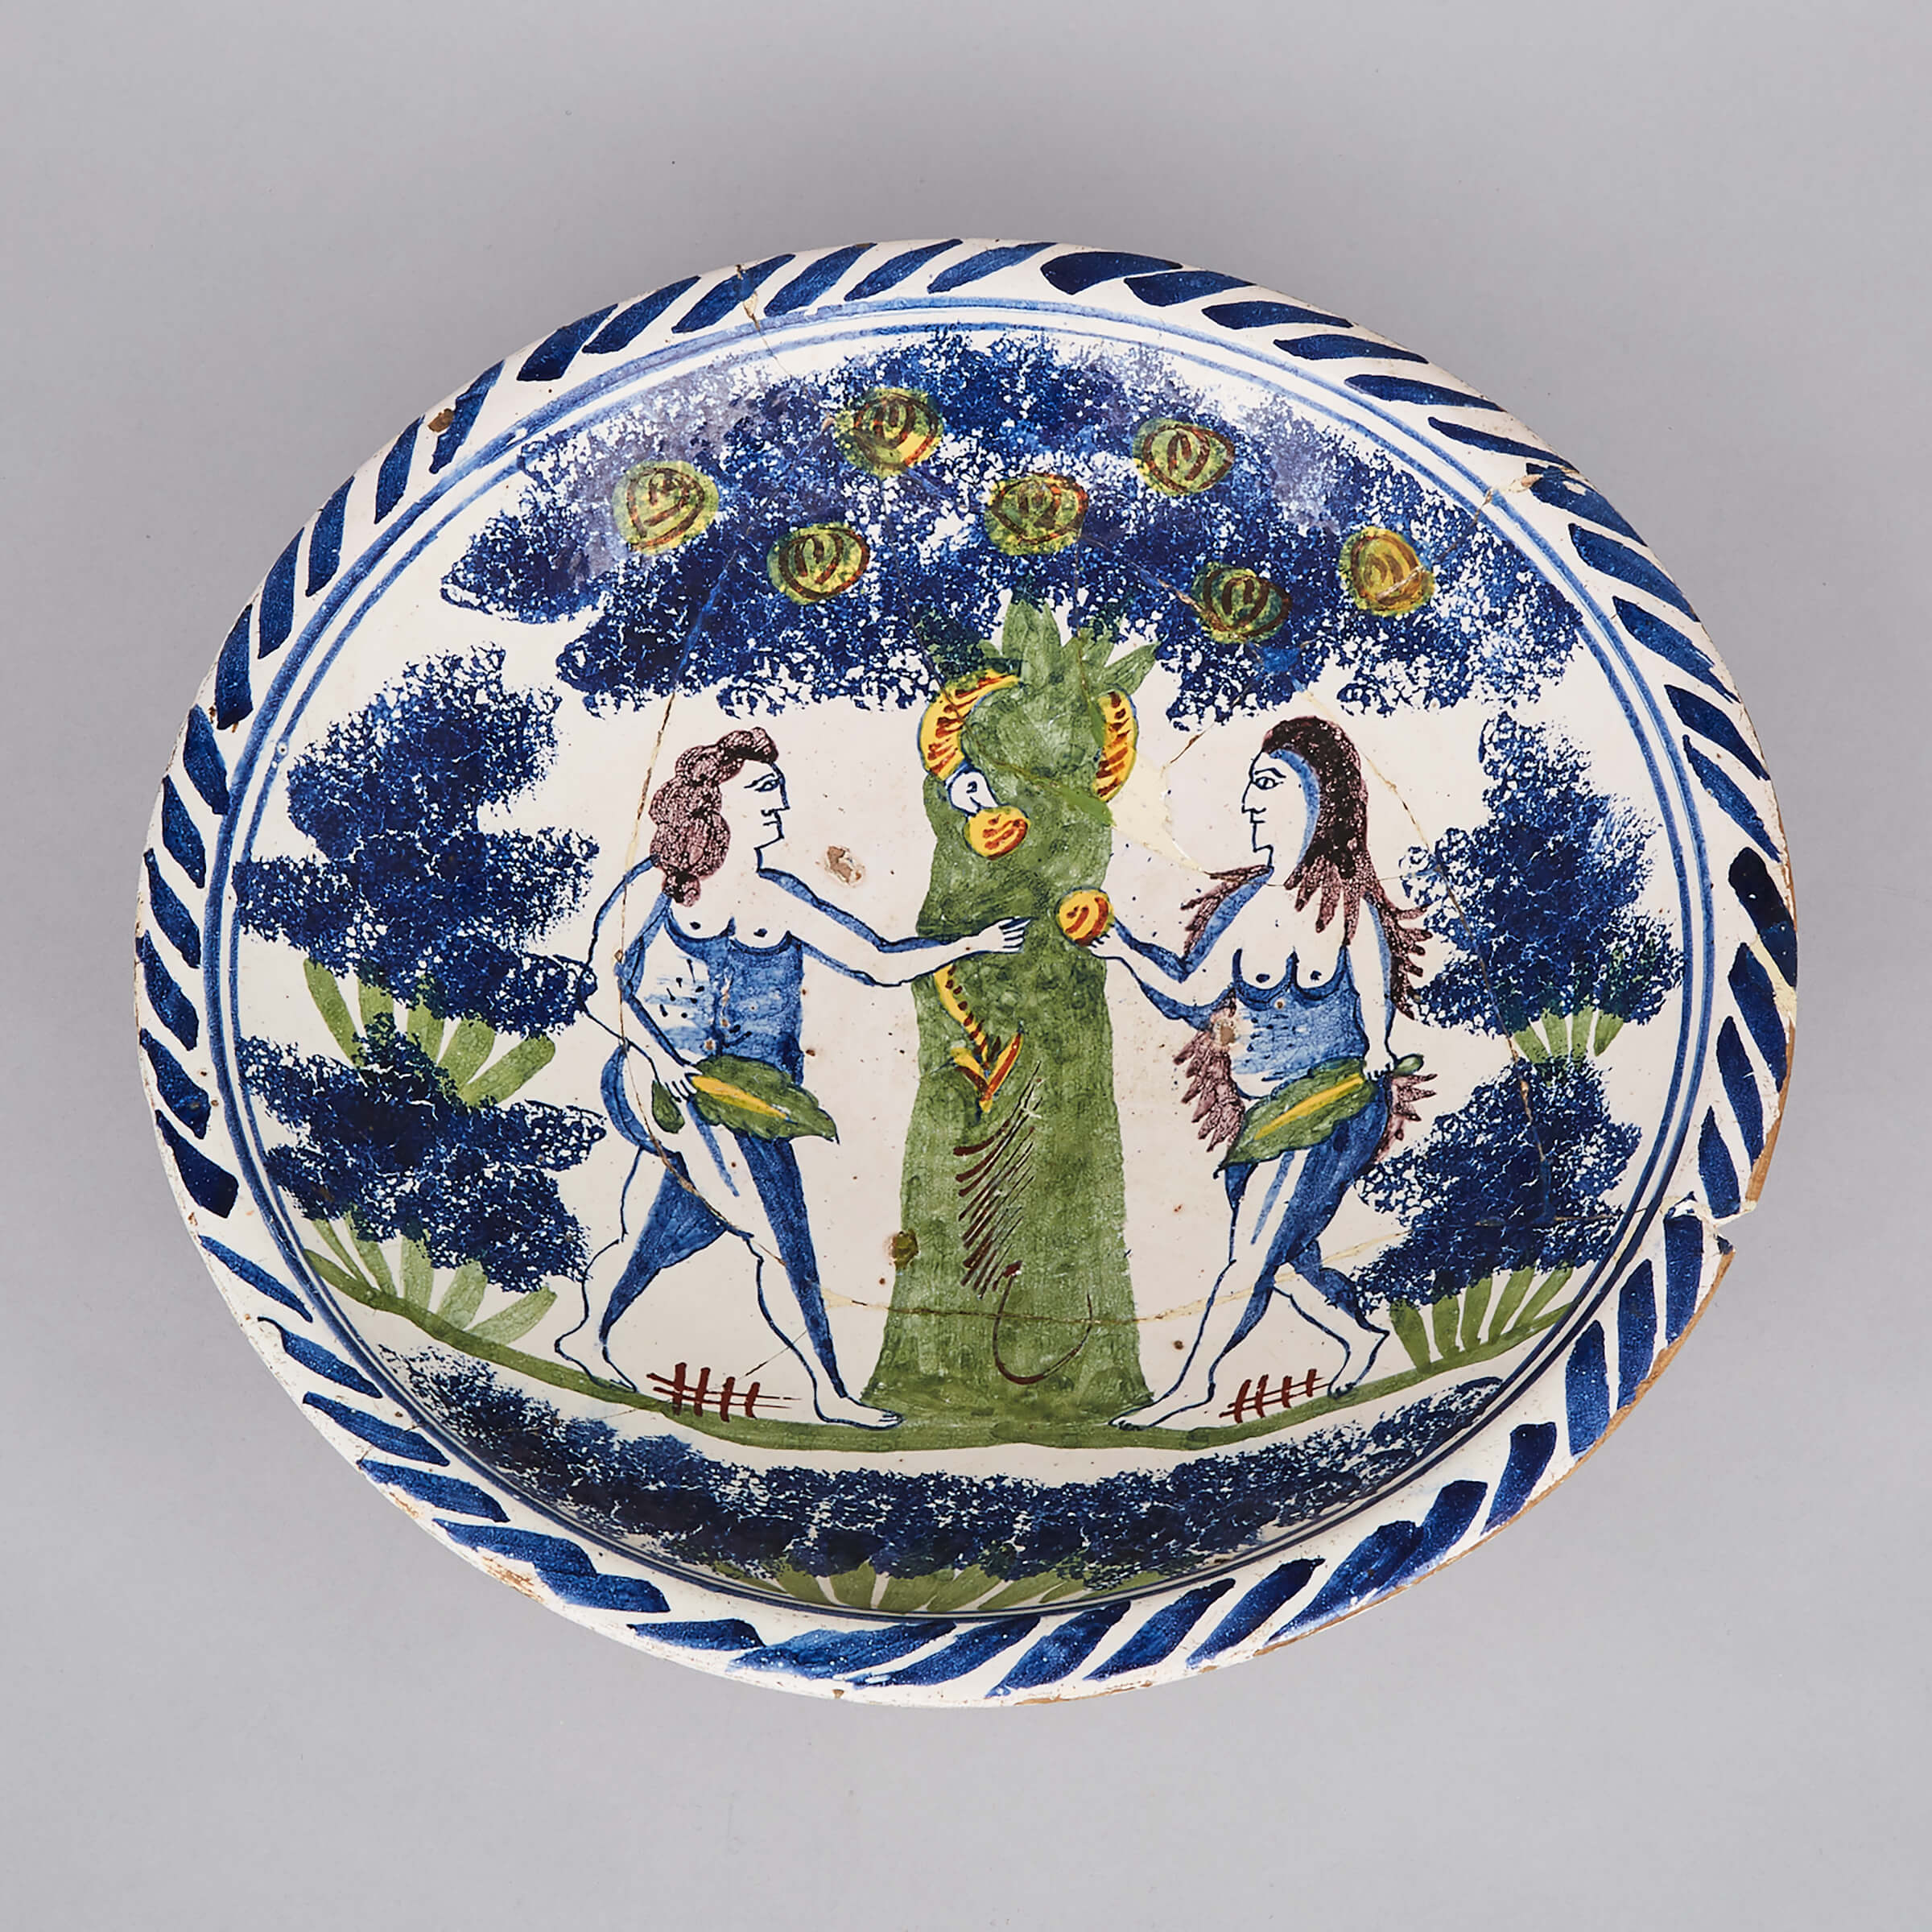 Brislington Delft ‘Adam & Eve’ Bowl, late 17th century